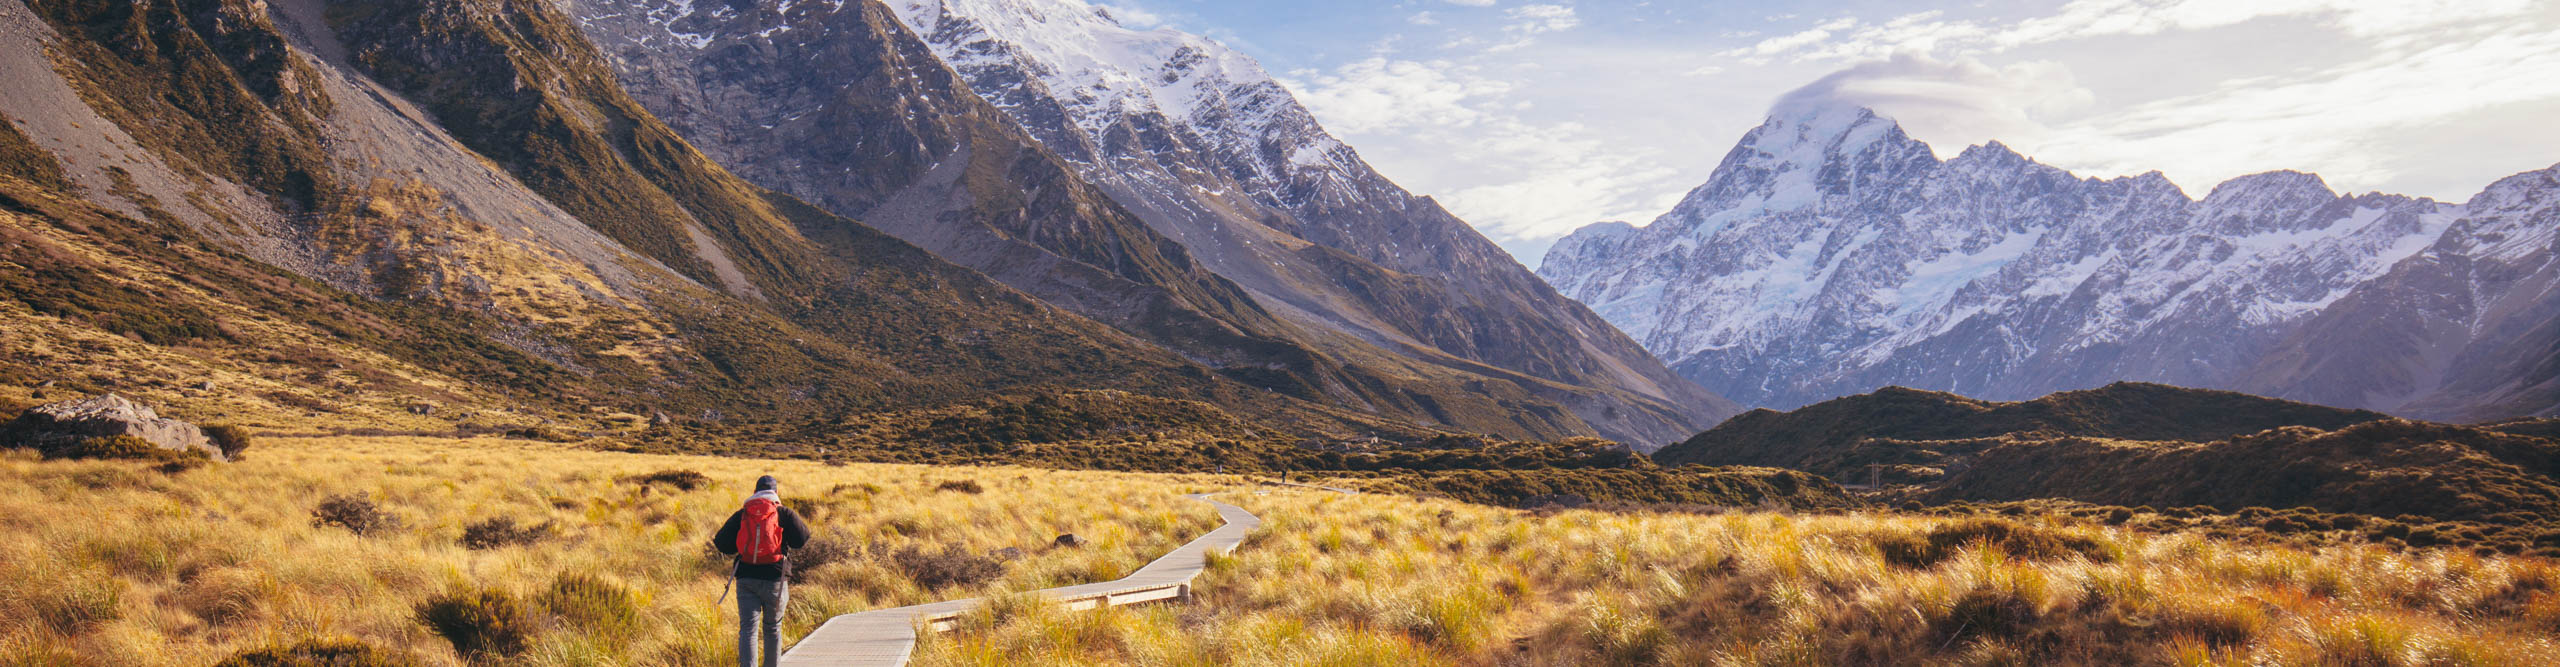 Intrepid traveller walks the mountain landscape of Hooker Valley near Mt Cook in New Zealand